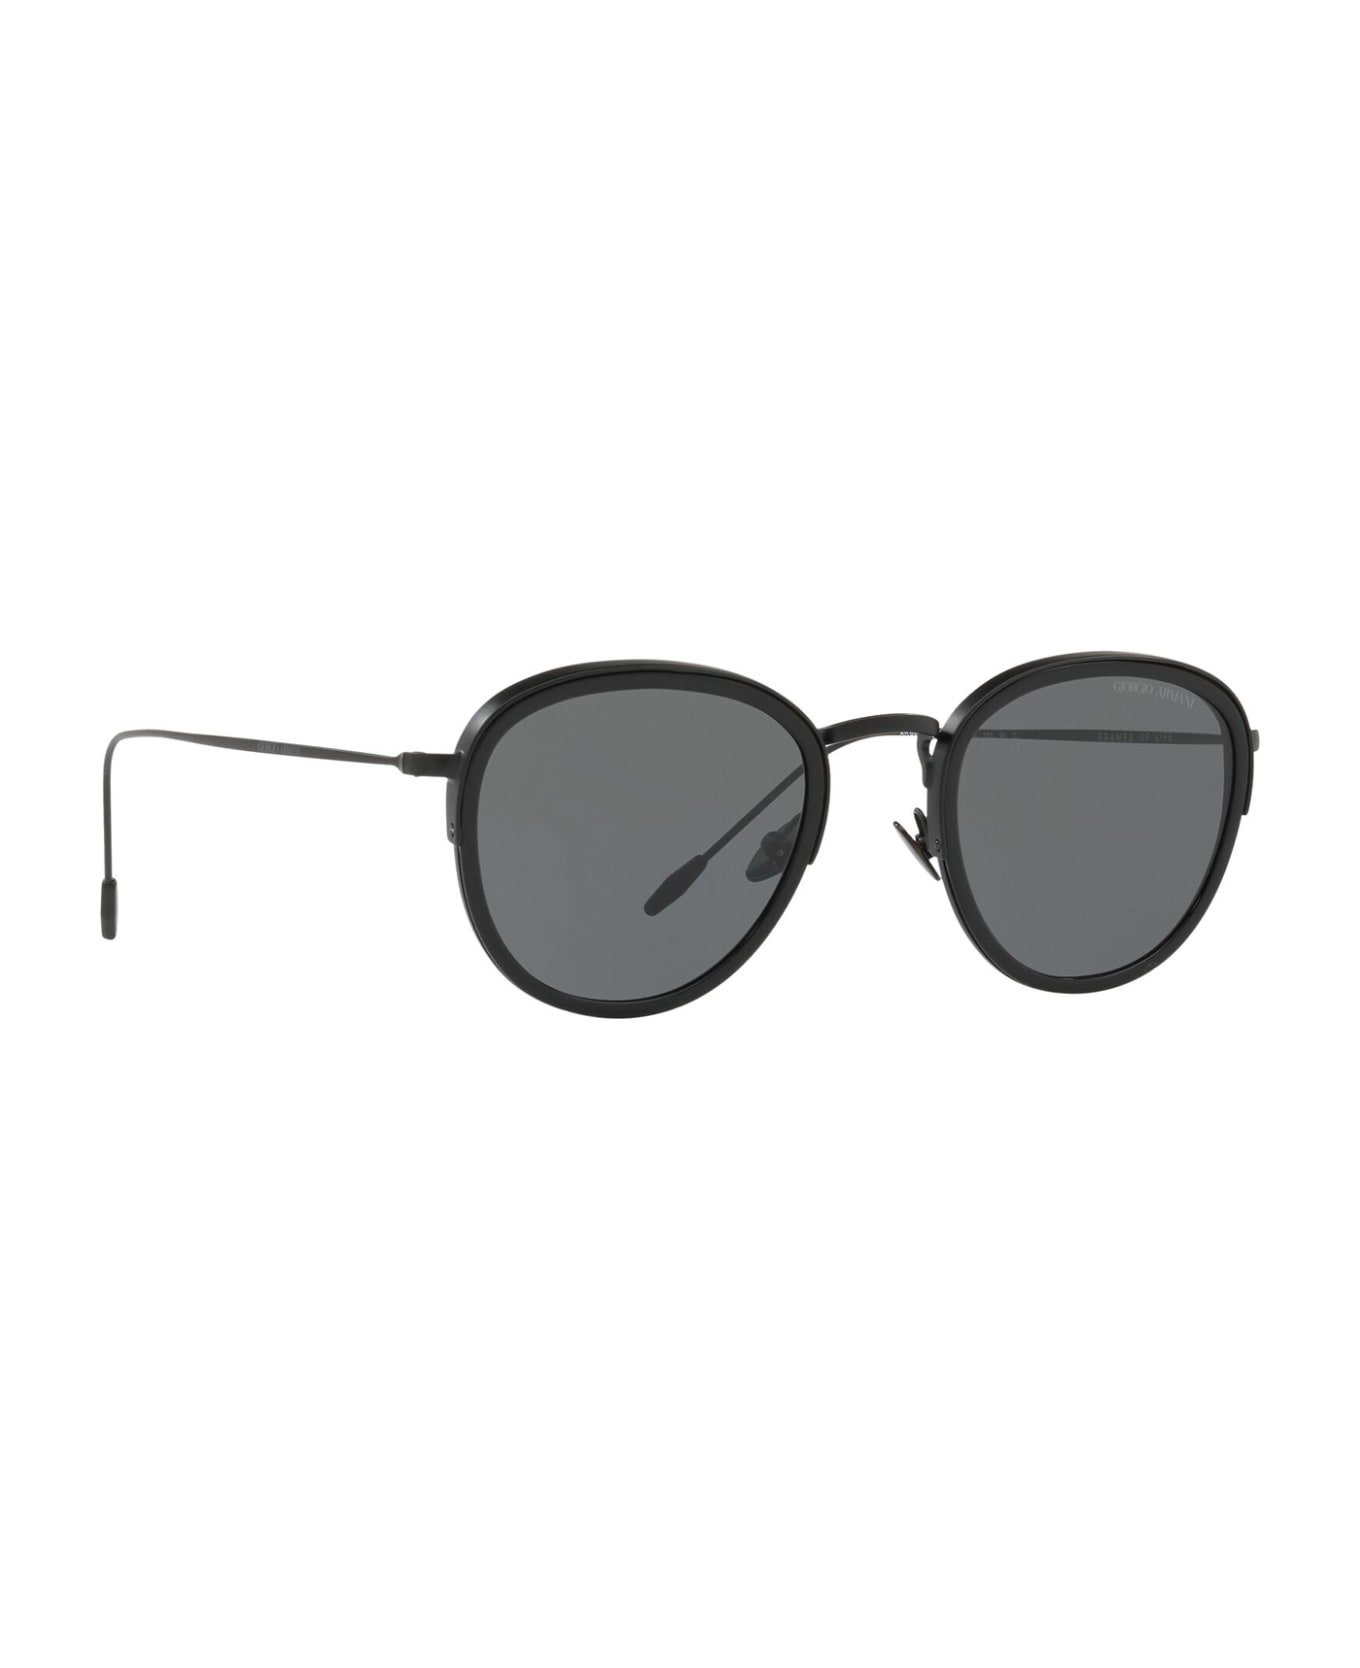 Giorgio Armani Ar6068 Black Sunglasses - Black